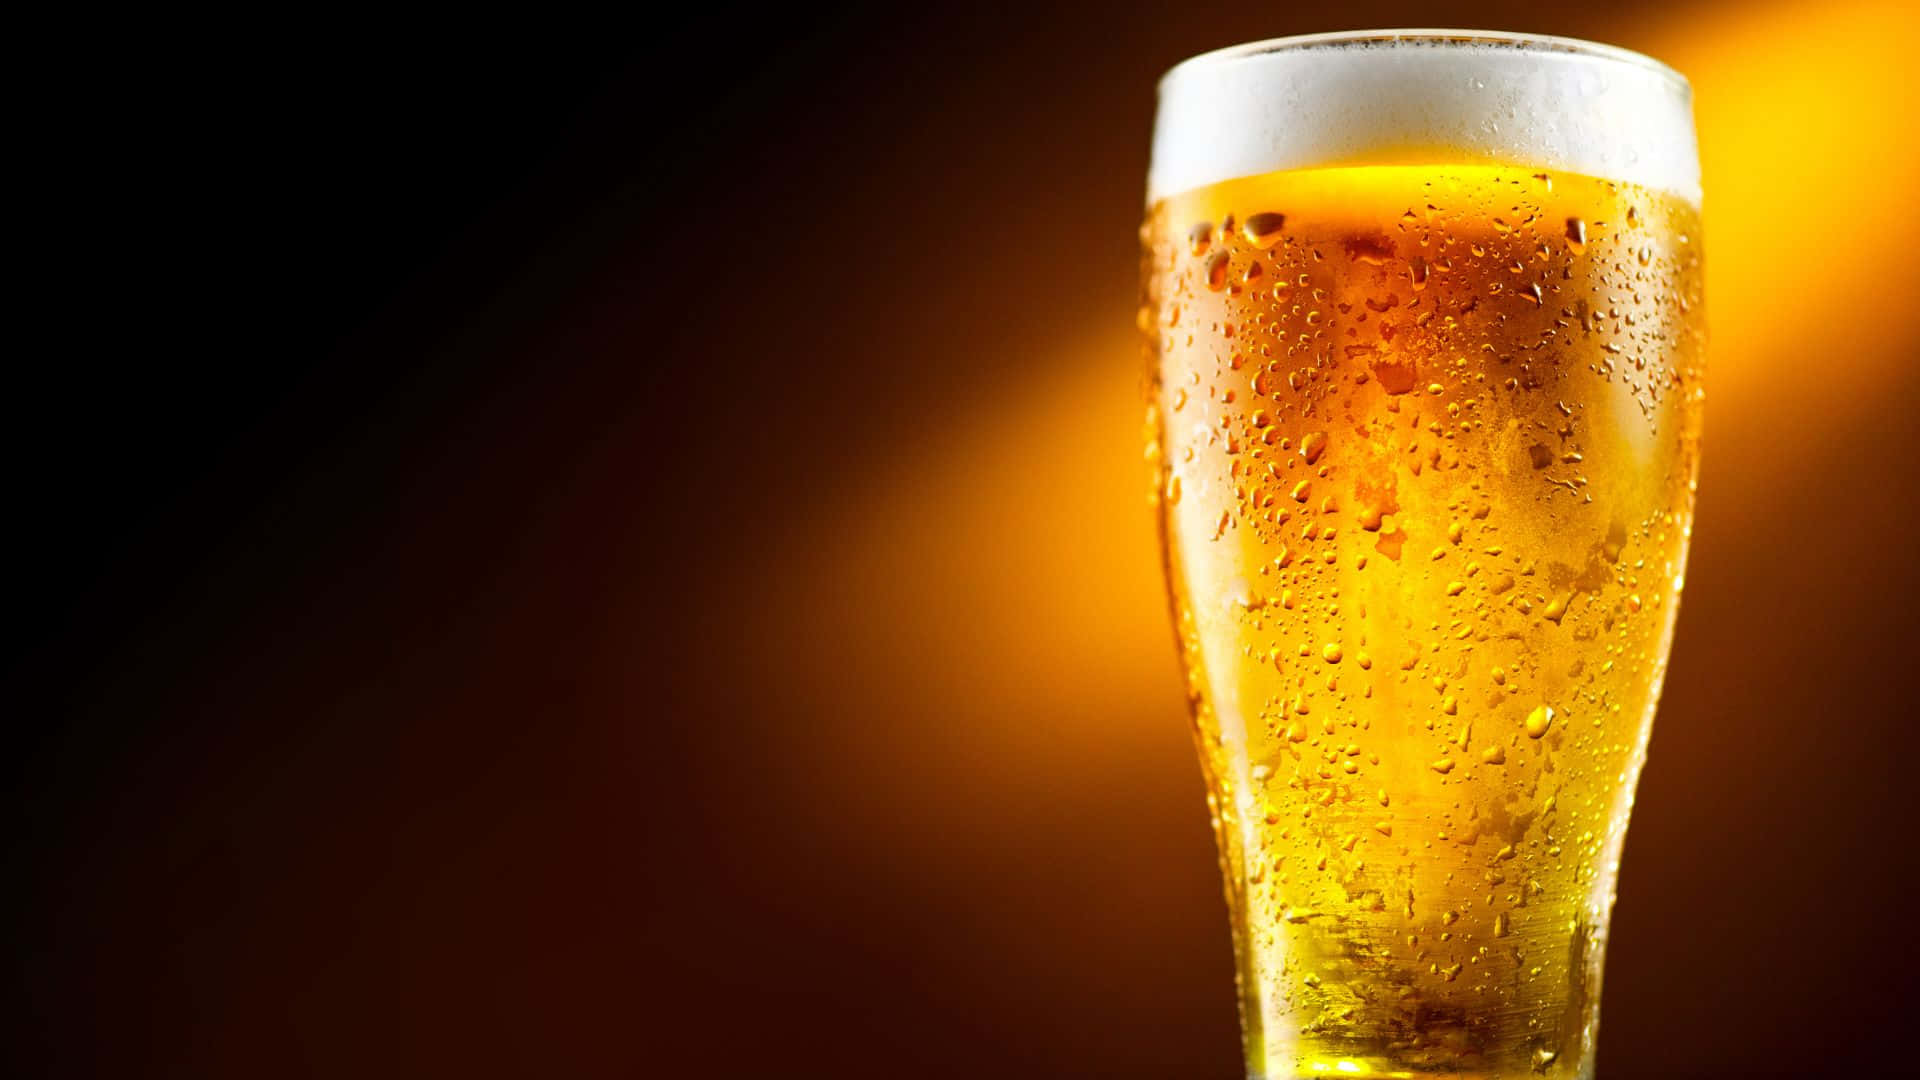 Barrel Beer and alcohol 4K wallpaper download